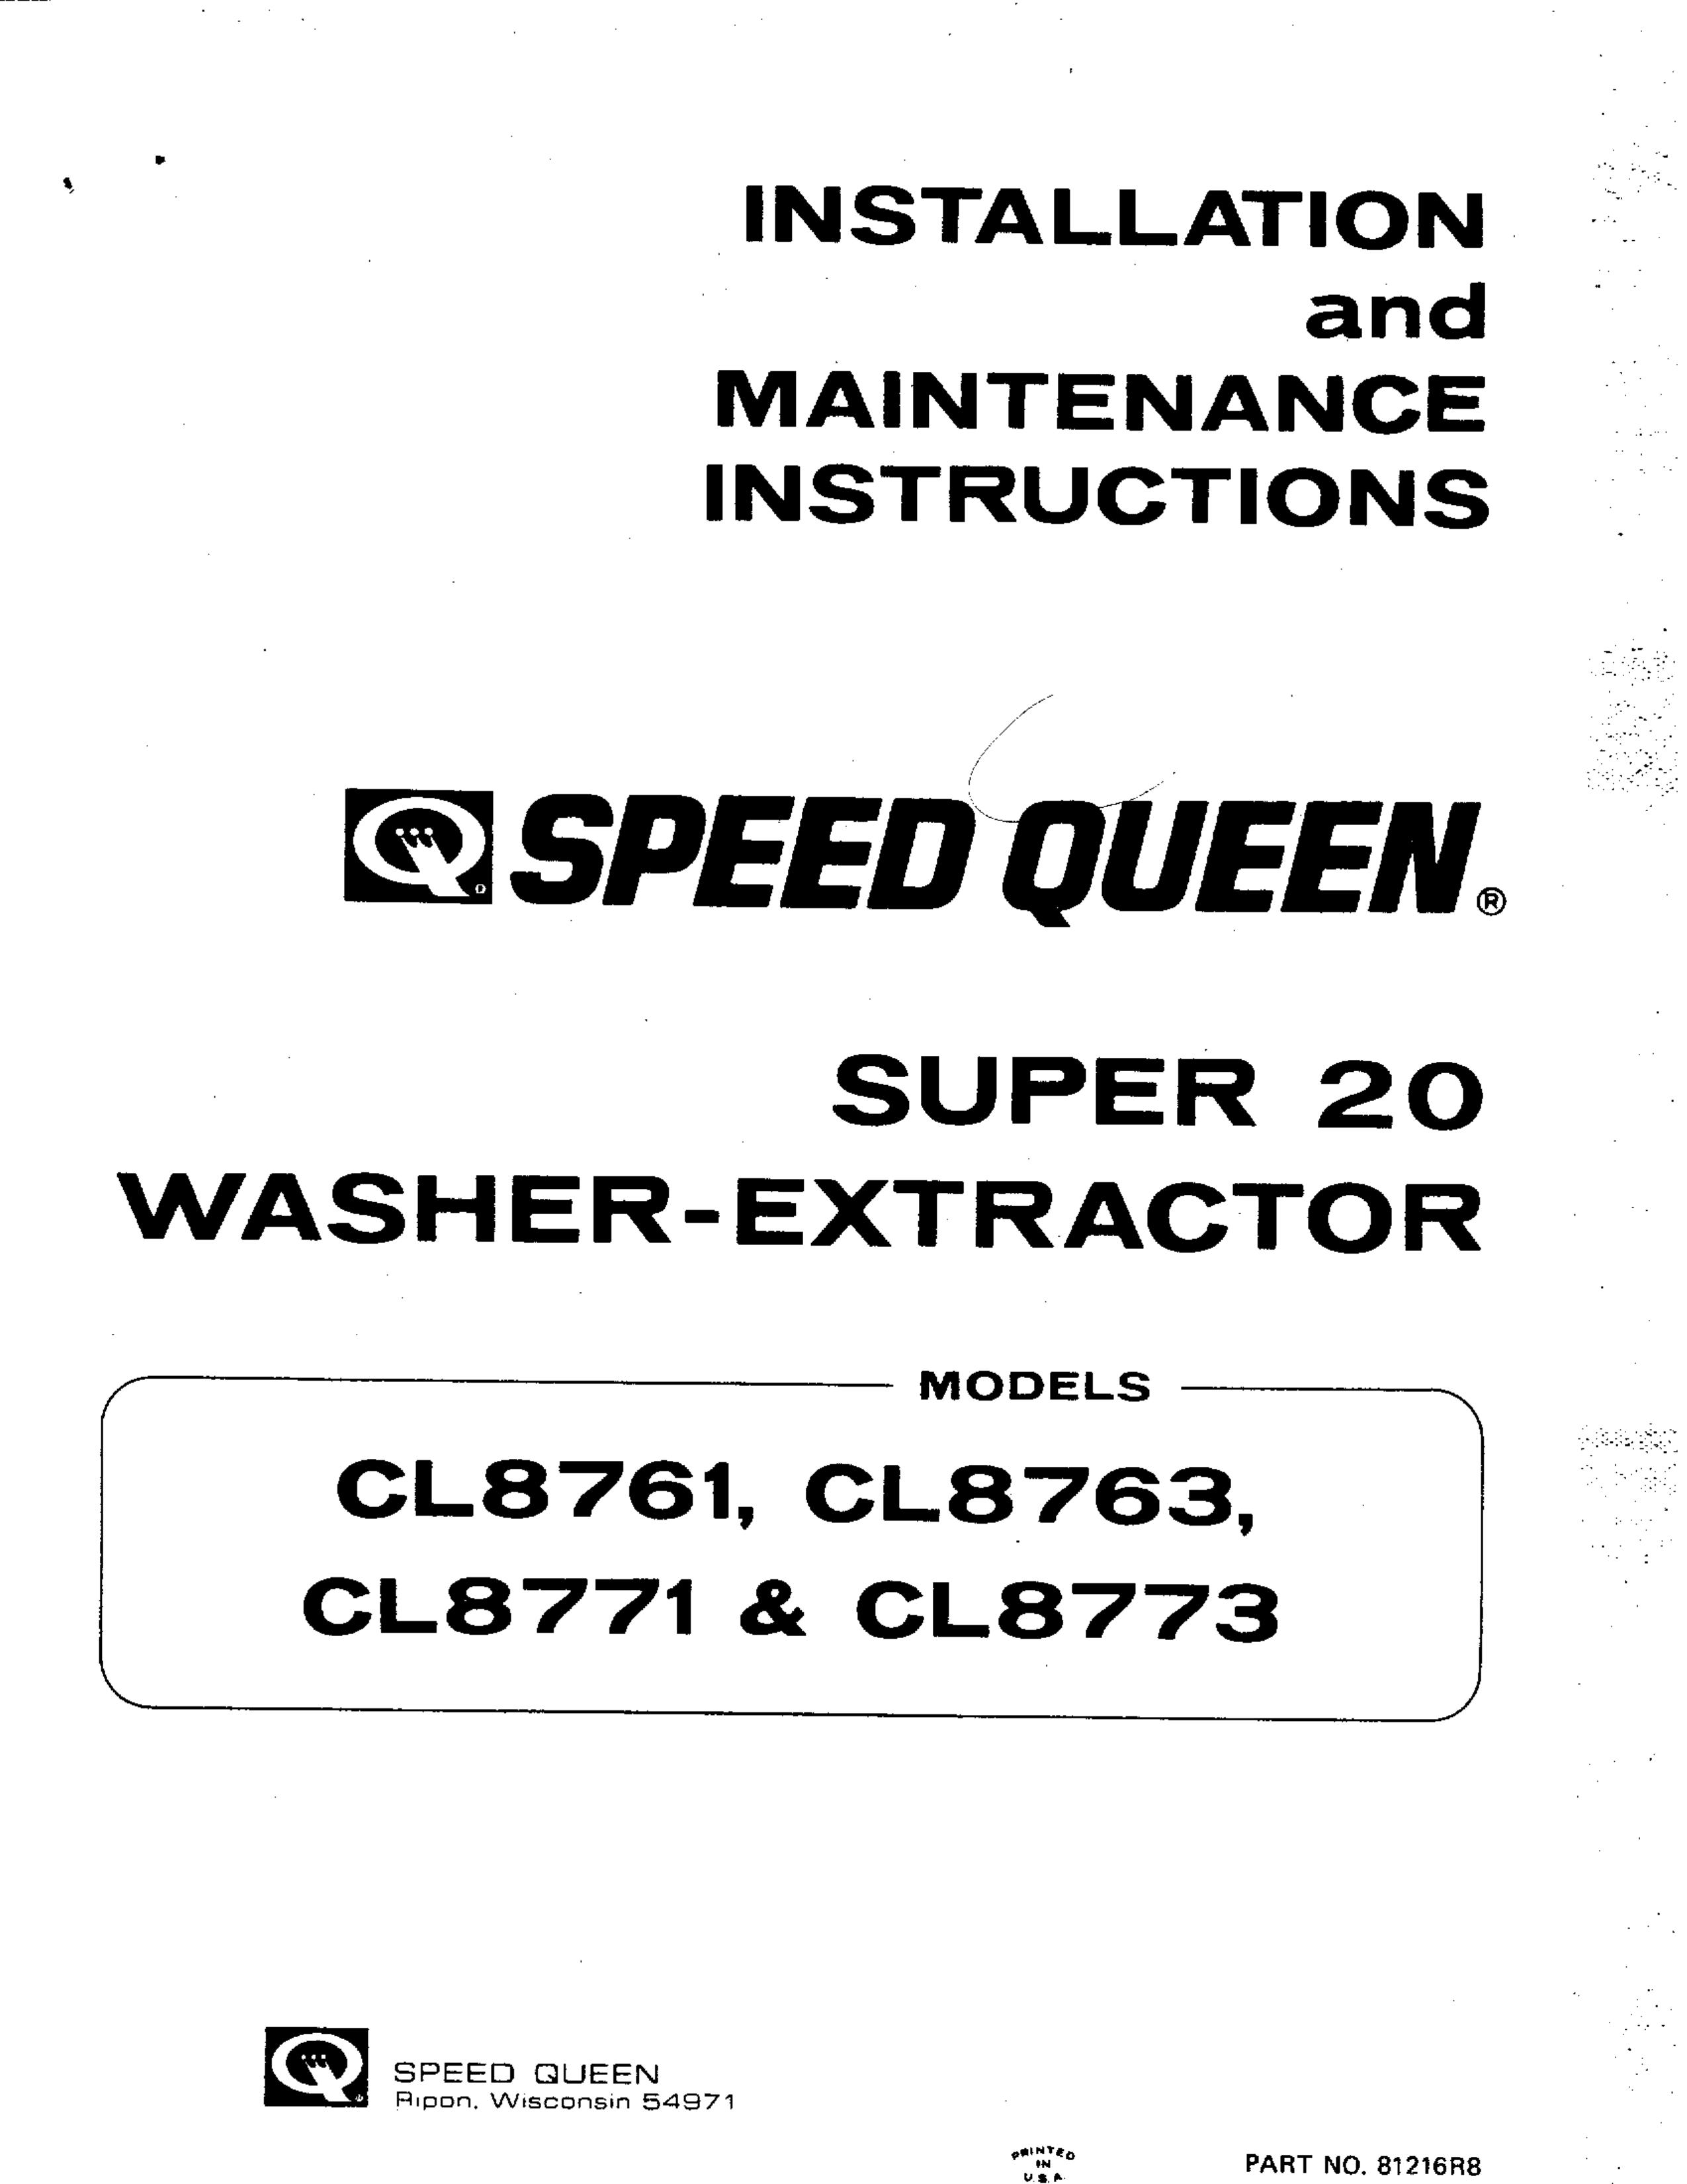 Speed Queen CL8763 Washer/Dryer User Manual